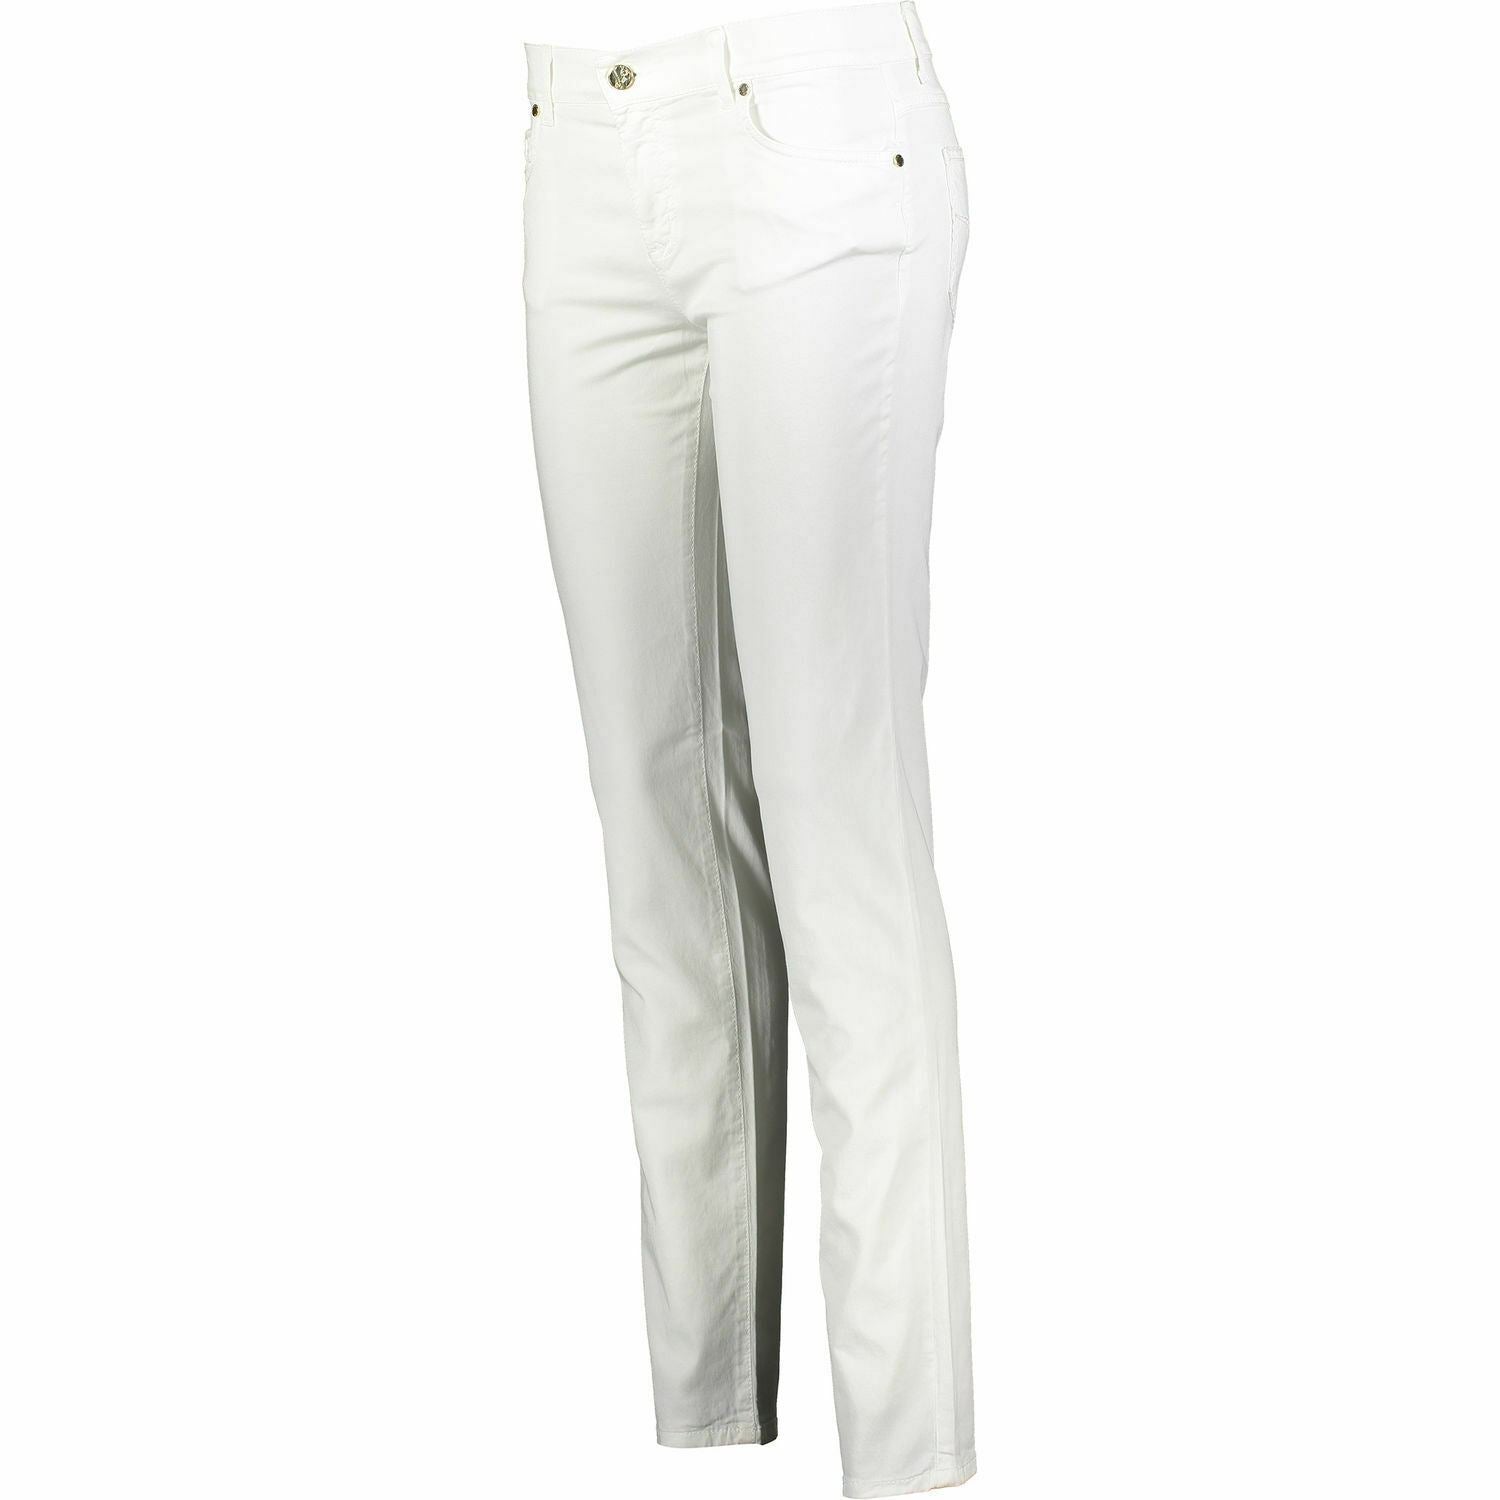 VERSACE JEANS Women's Skinny 5-Pocket Jeans Trousers White, sizes W28